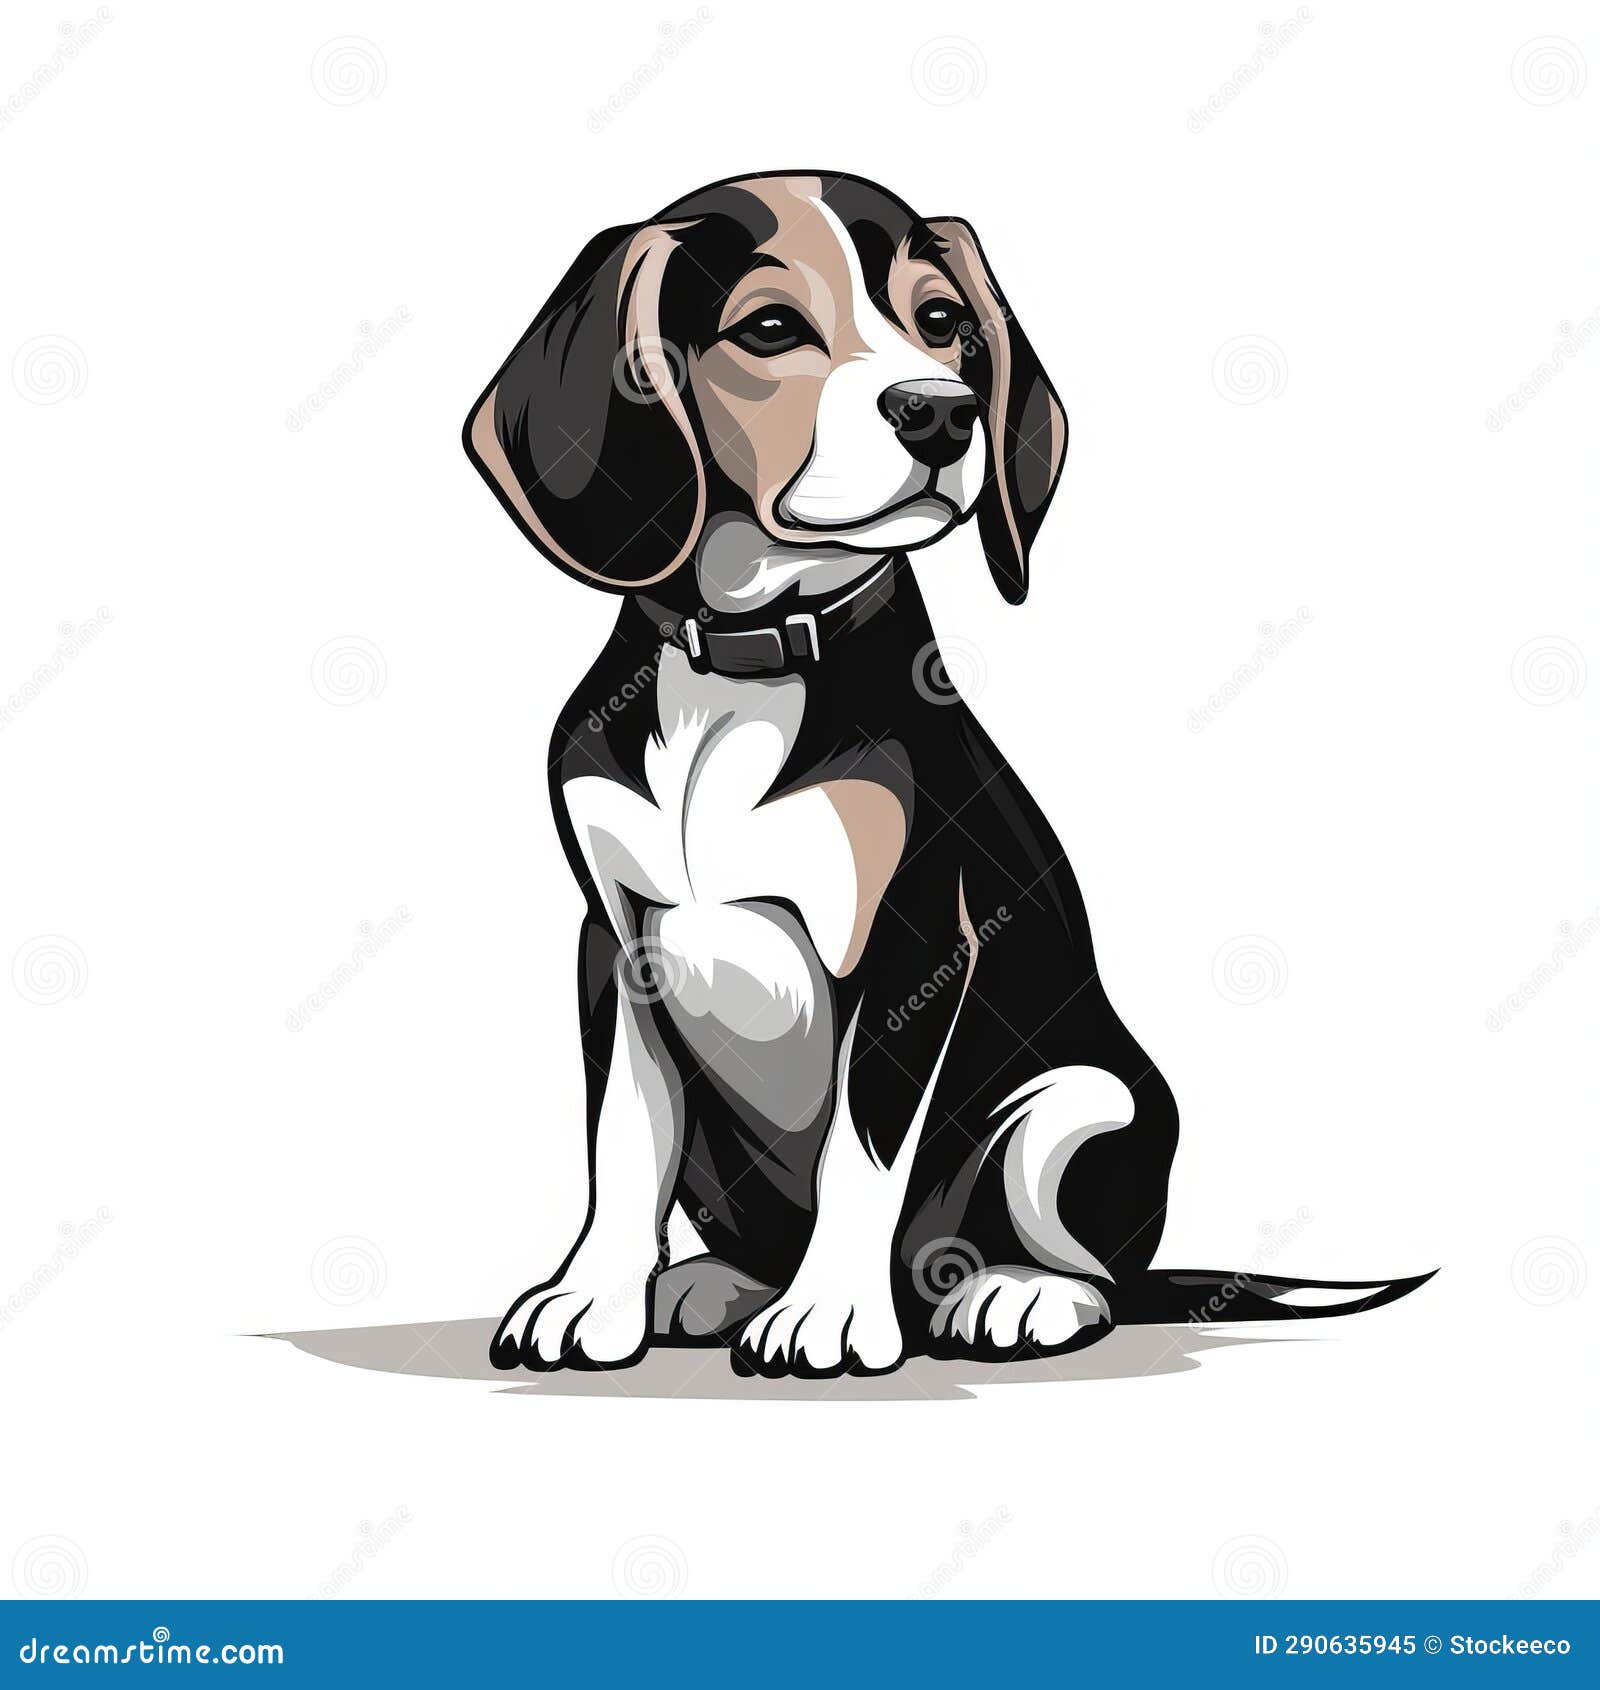 high-contrast beagle dog cartoon  by john walker